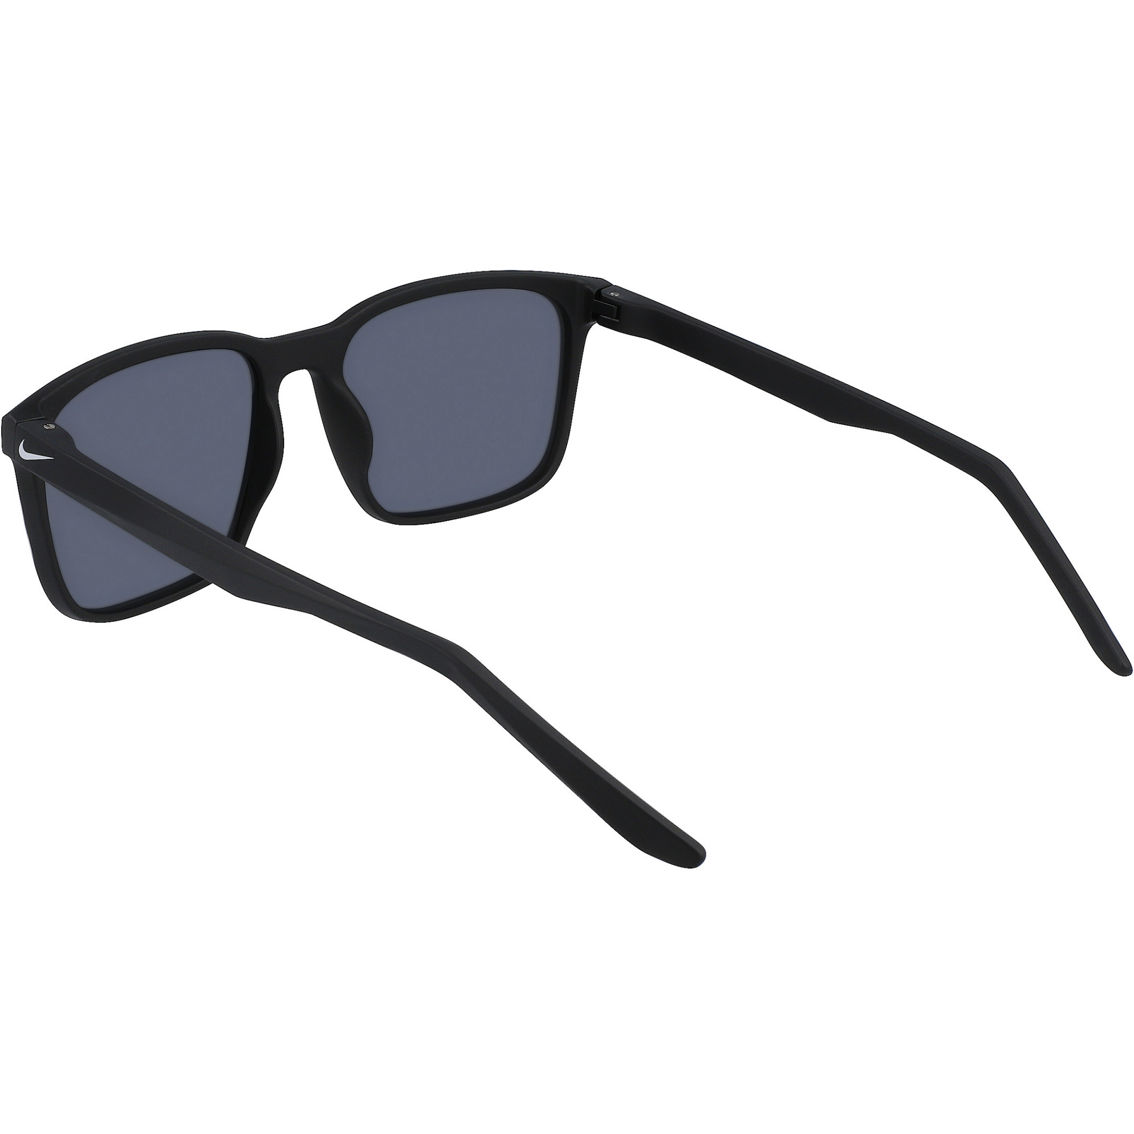 Nike Rave Polarized Men's/Women's Sunglasses FD1849 013 - Image 5 of 5